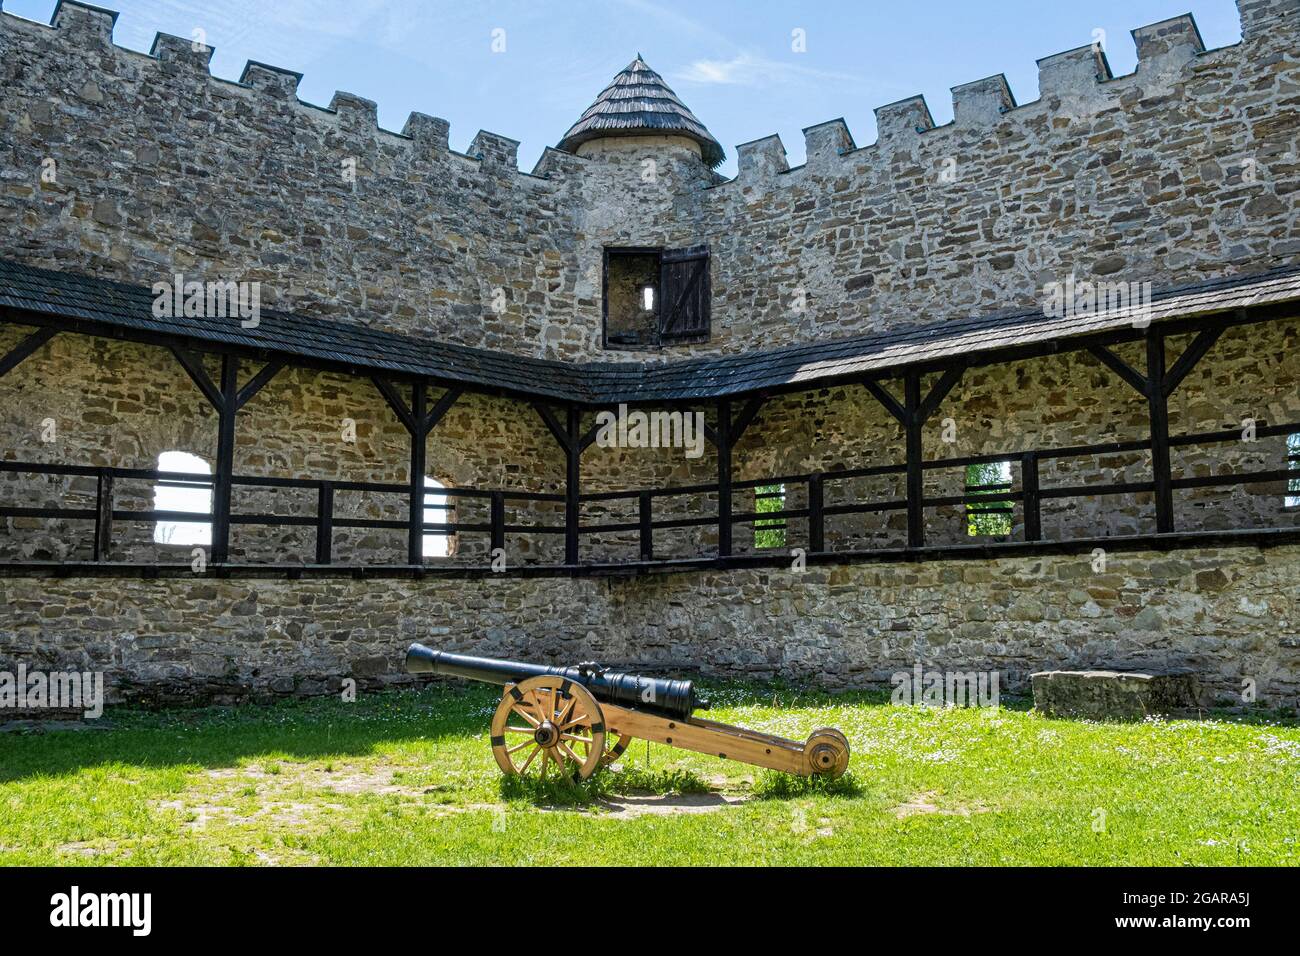 Courtyard in Stara Lubovna castle ruins, Slovak republic, Europe. Travel destination. Stock Photo